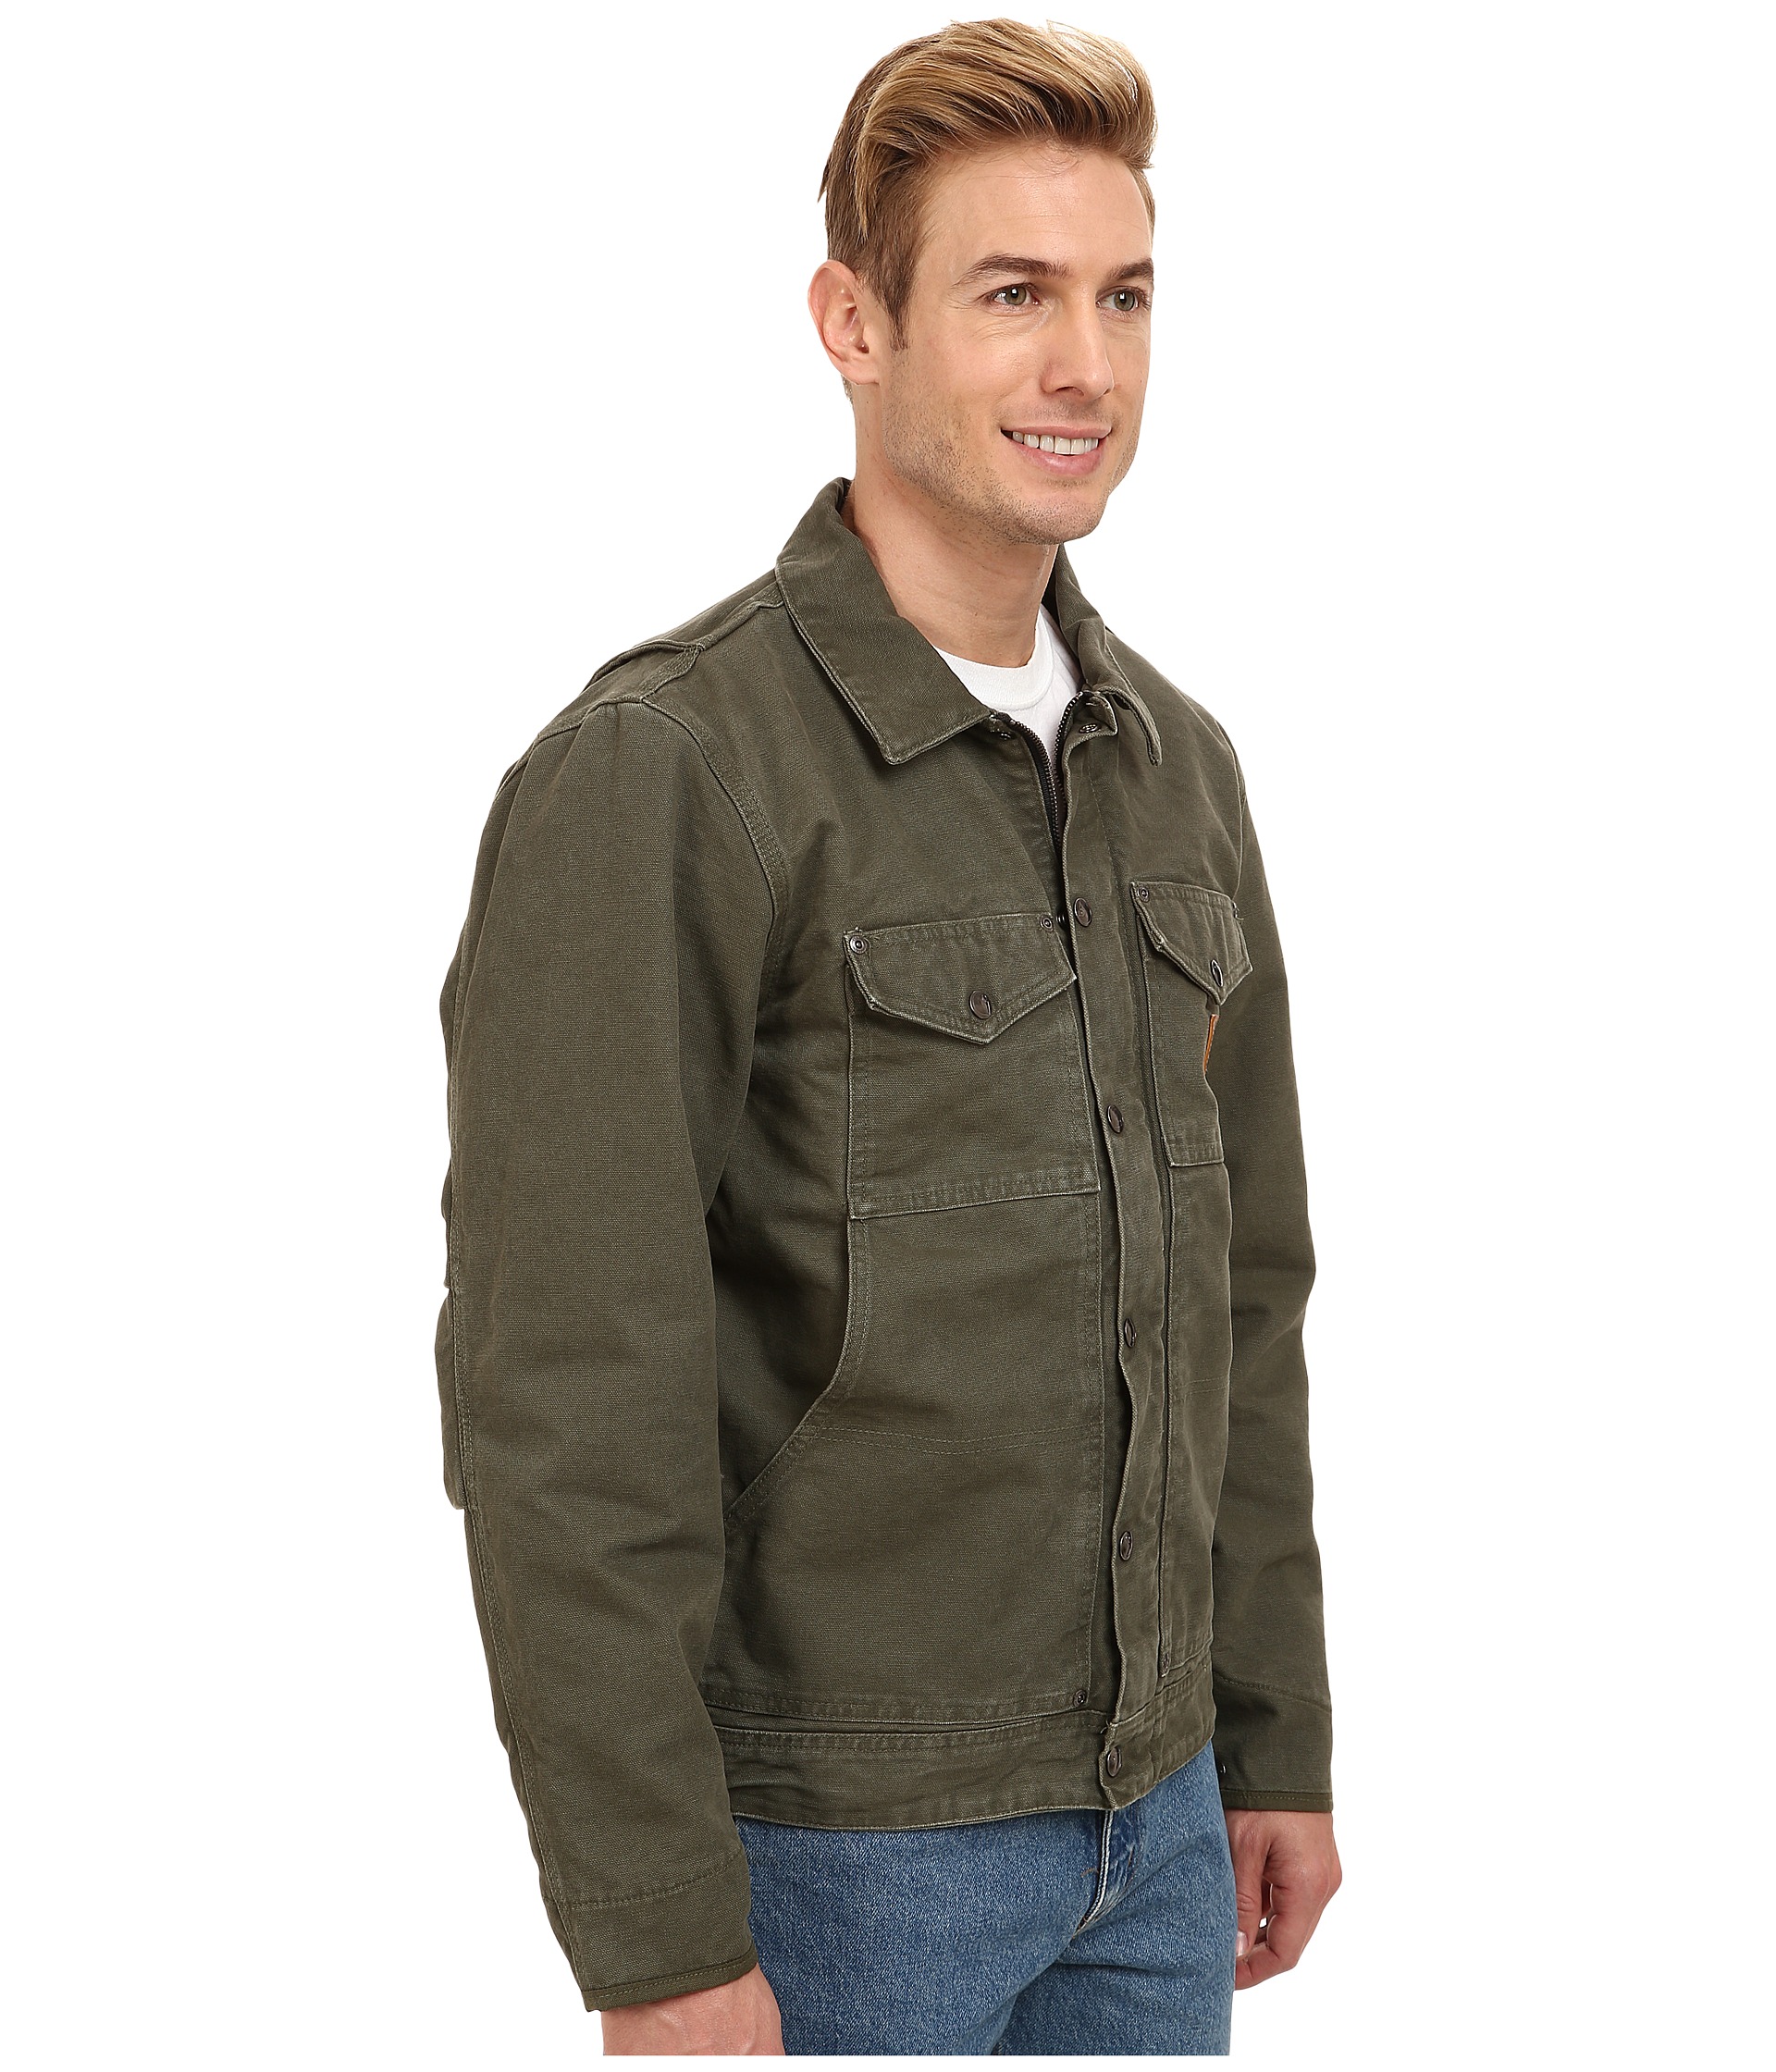 Carhartt Berwick Jacket Army Green, Clothing, Men | Shipped Free at Zappos